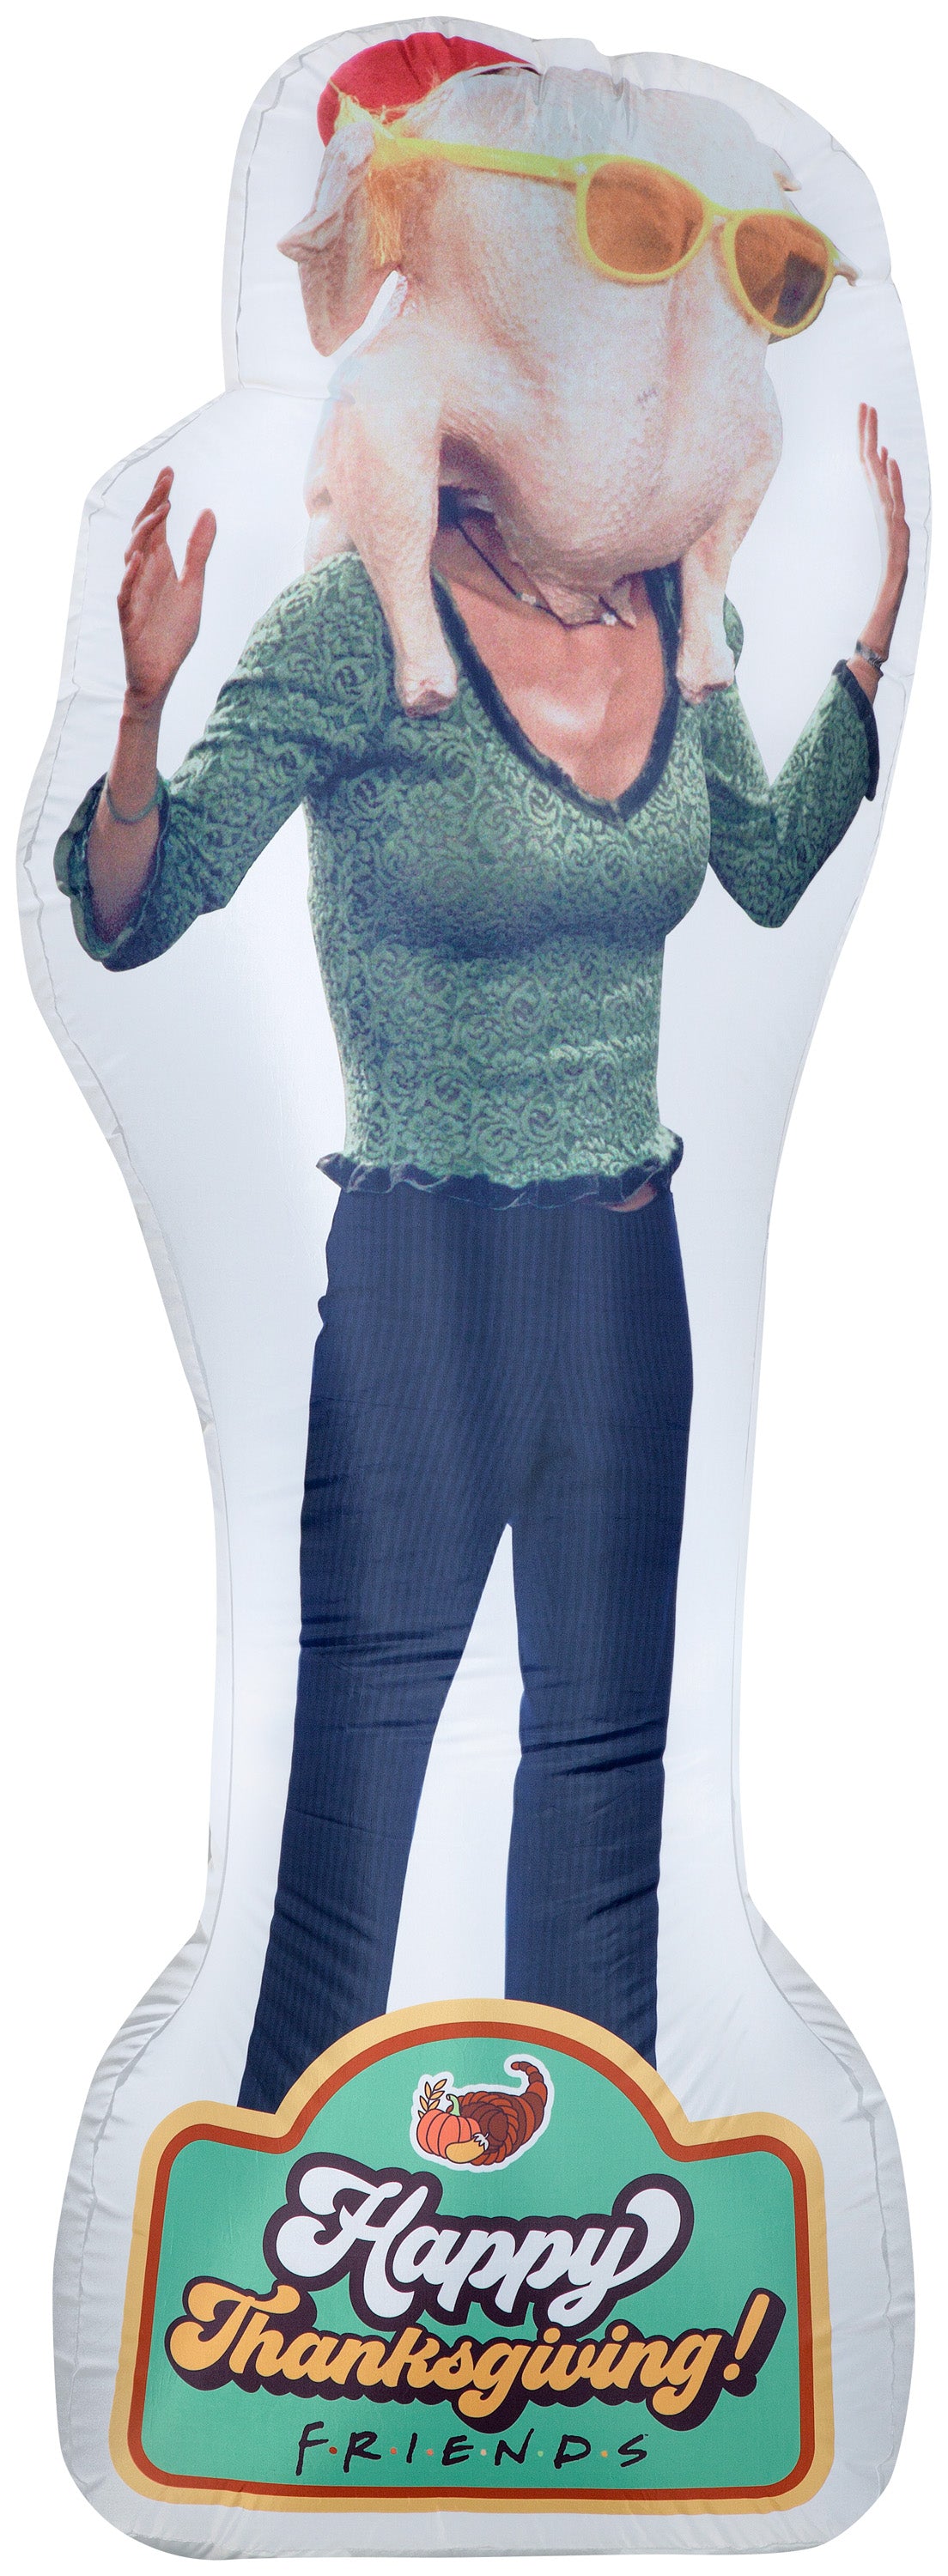 Gemmy Photorealistic Airblown Monica w/Turkey On Her Head S LG WB , 6 ft Tall